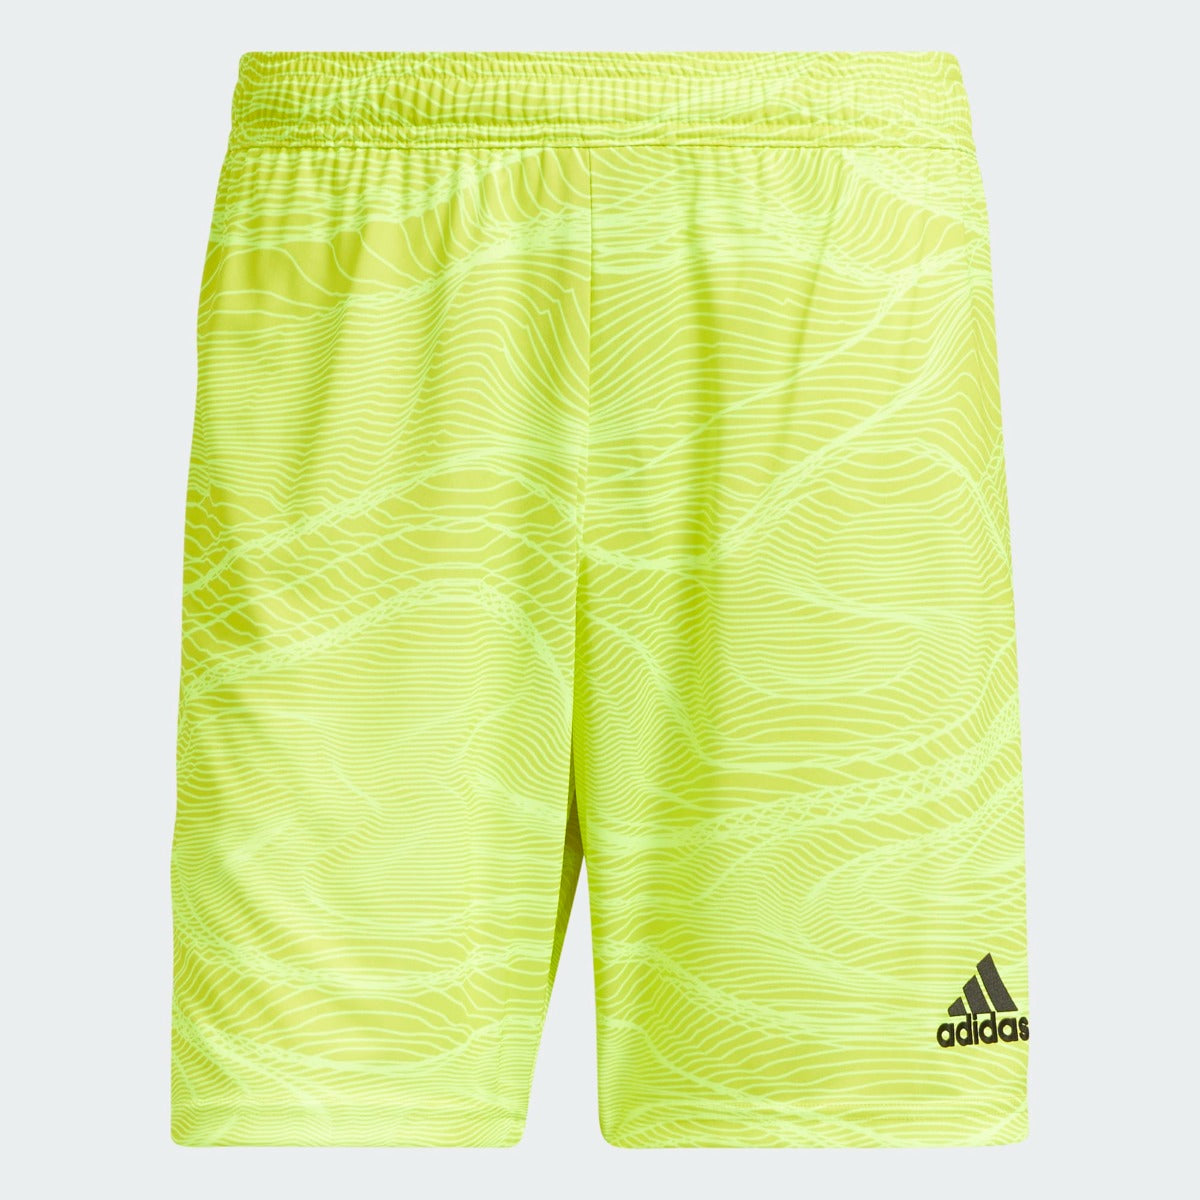 Adidas Condivo 21 Goalkeeper Shorts - Acid Yellow (Front)